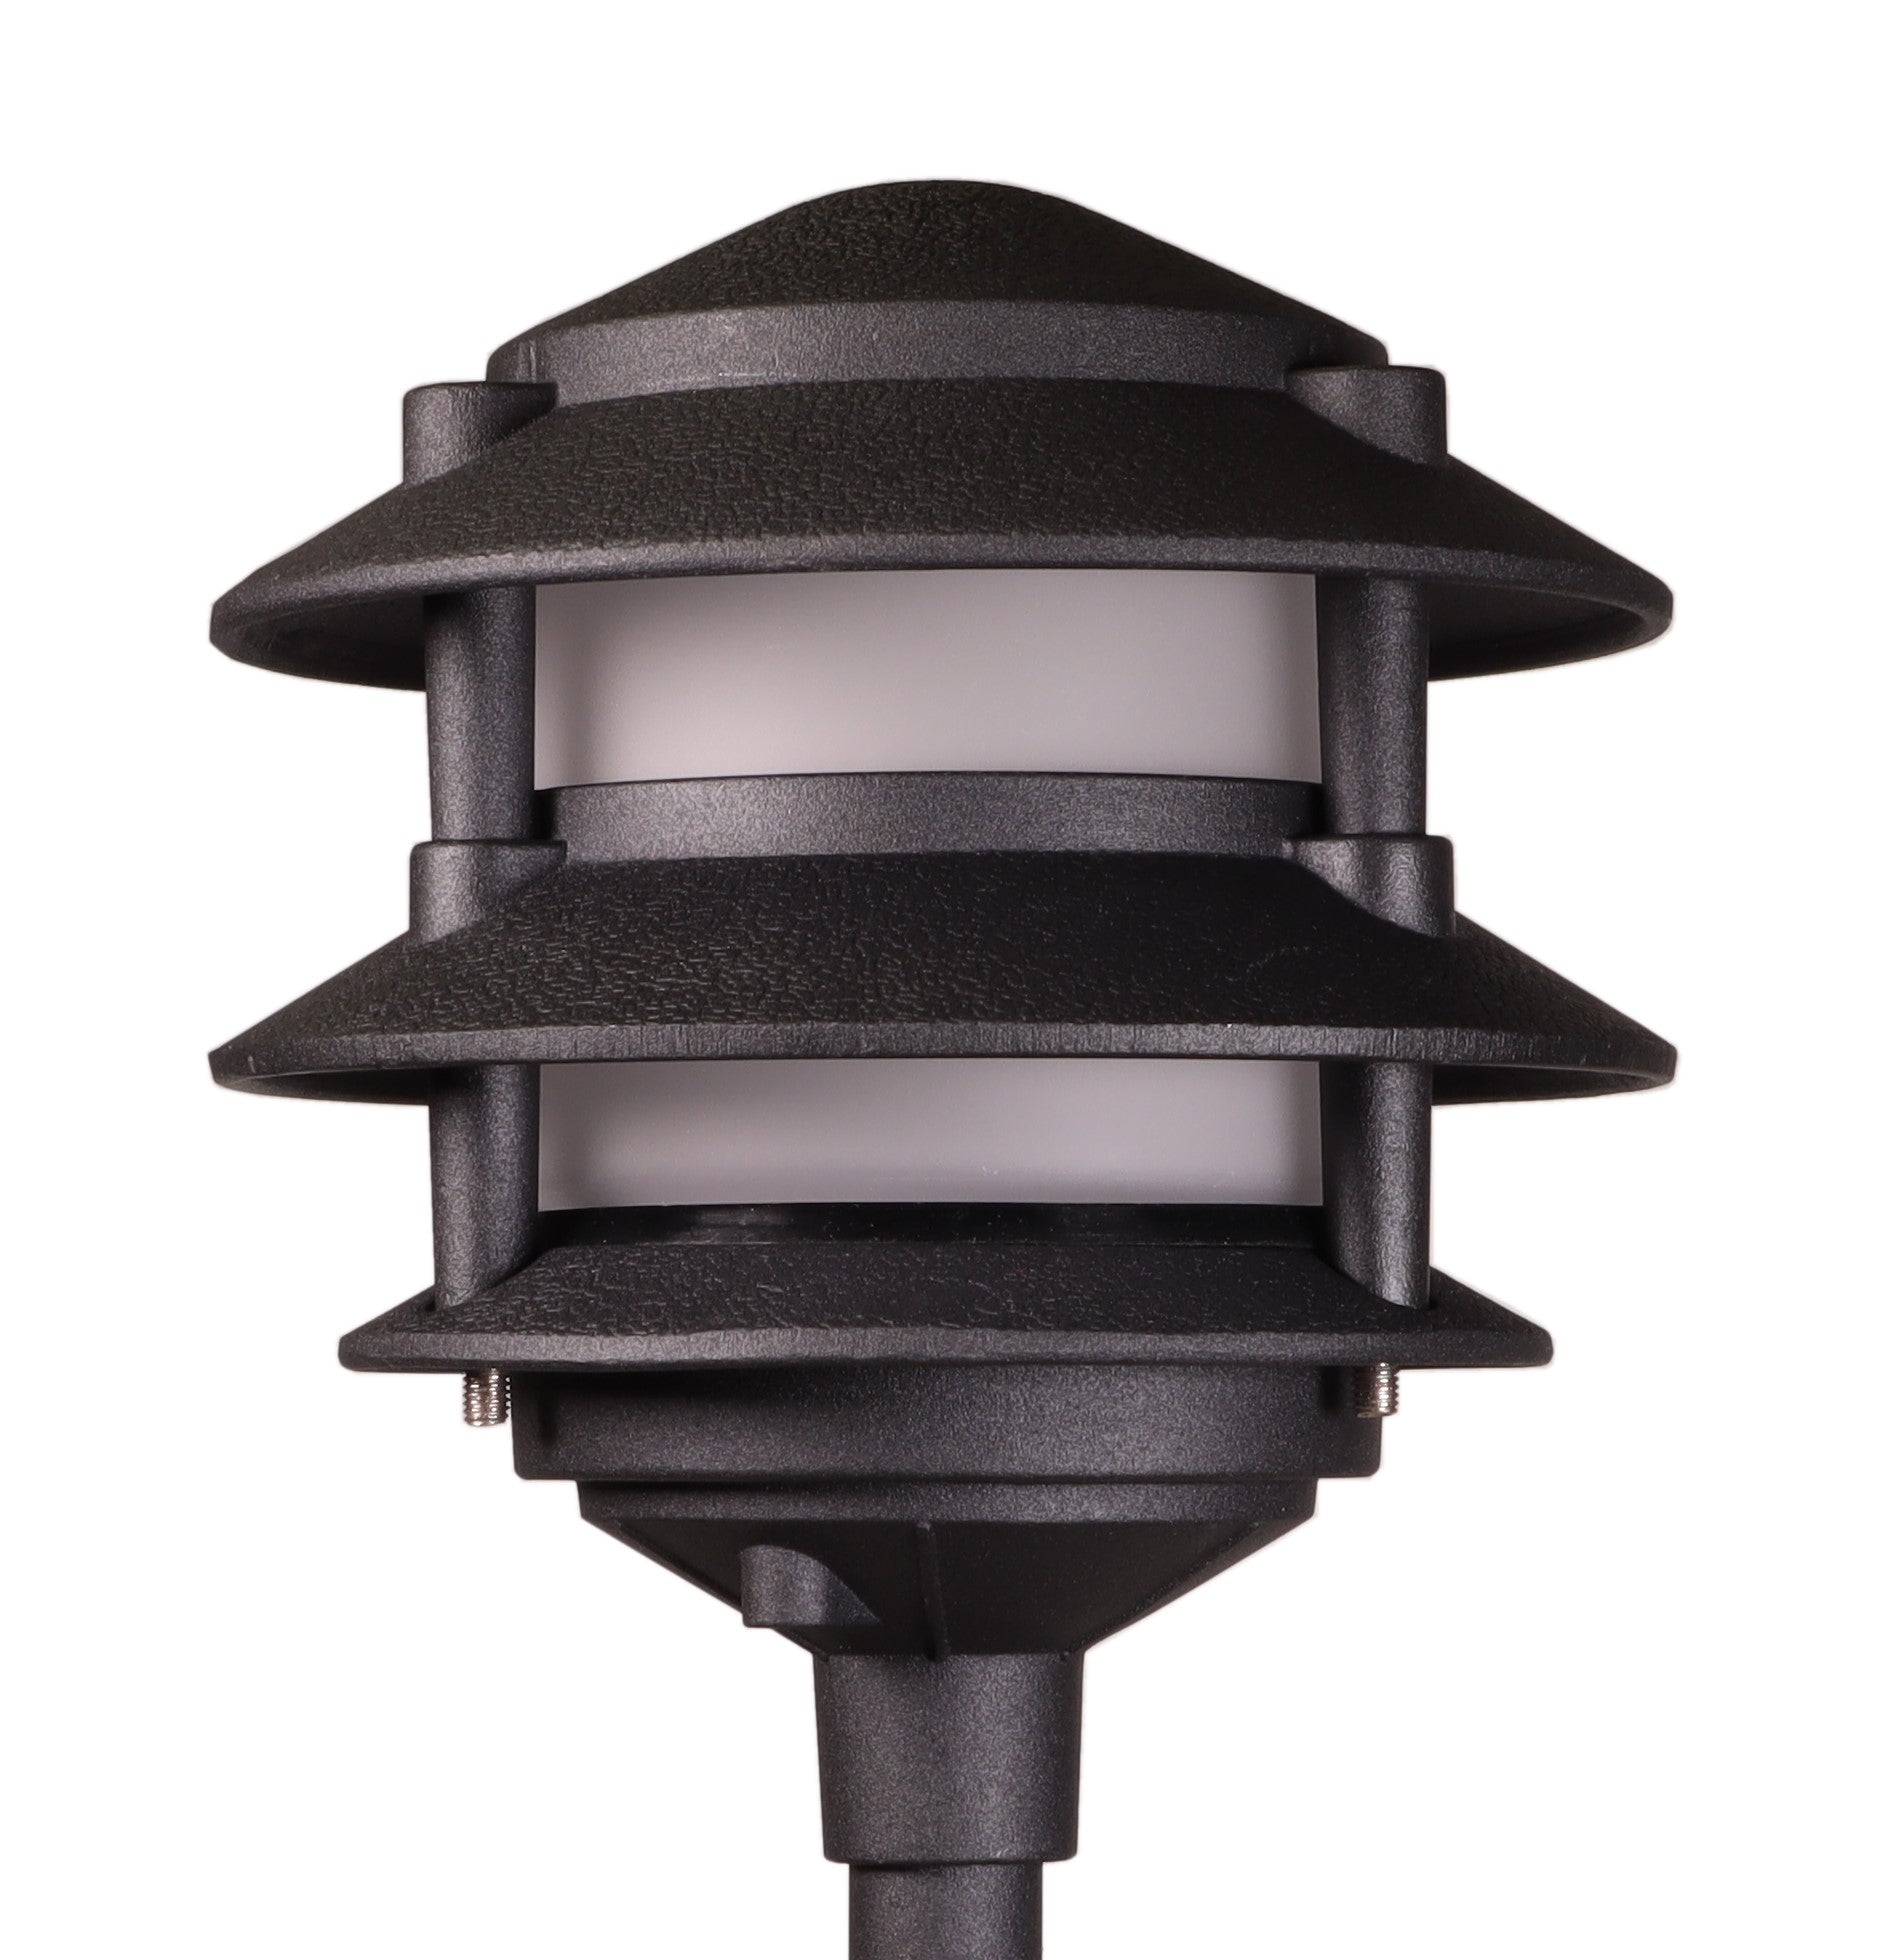 Best Pro Lighting Low Voltage Landscape Light Cast Aluminum 3 Tier Pagoda in Black- BPL302